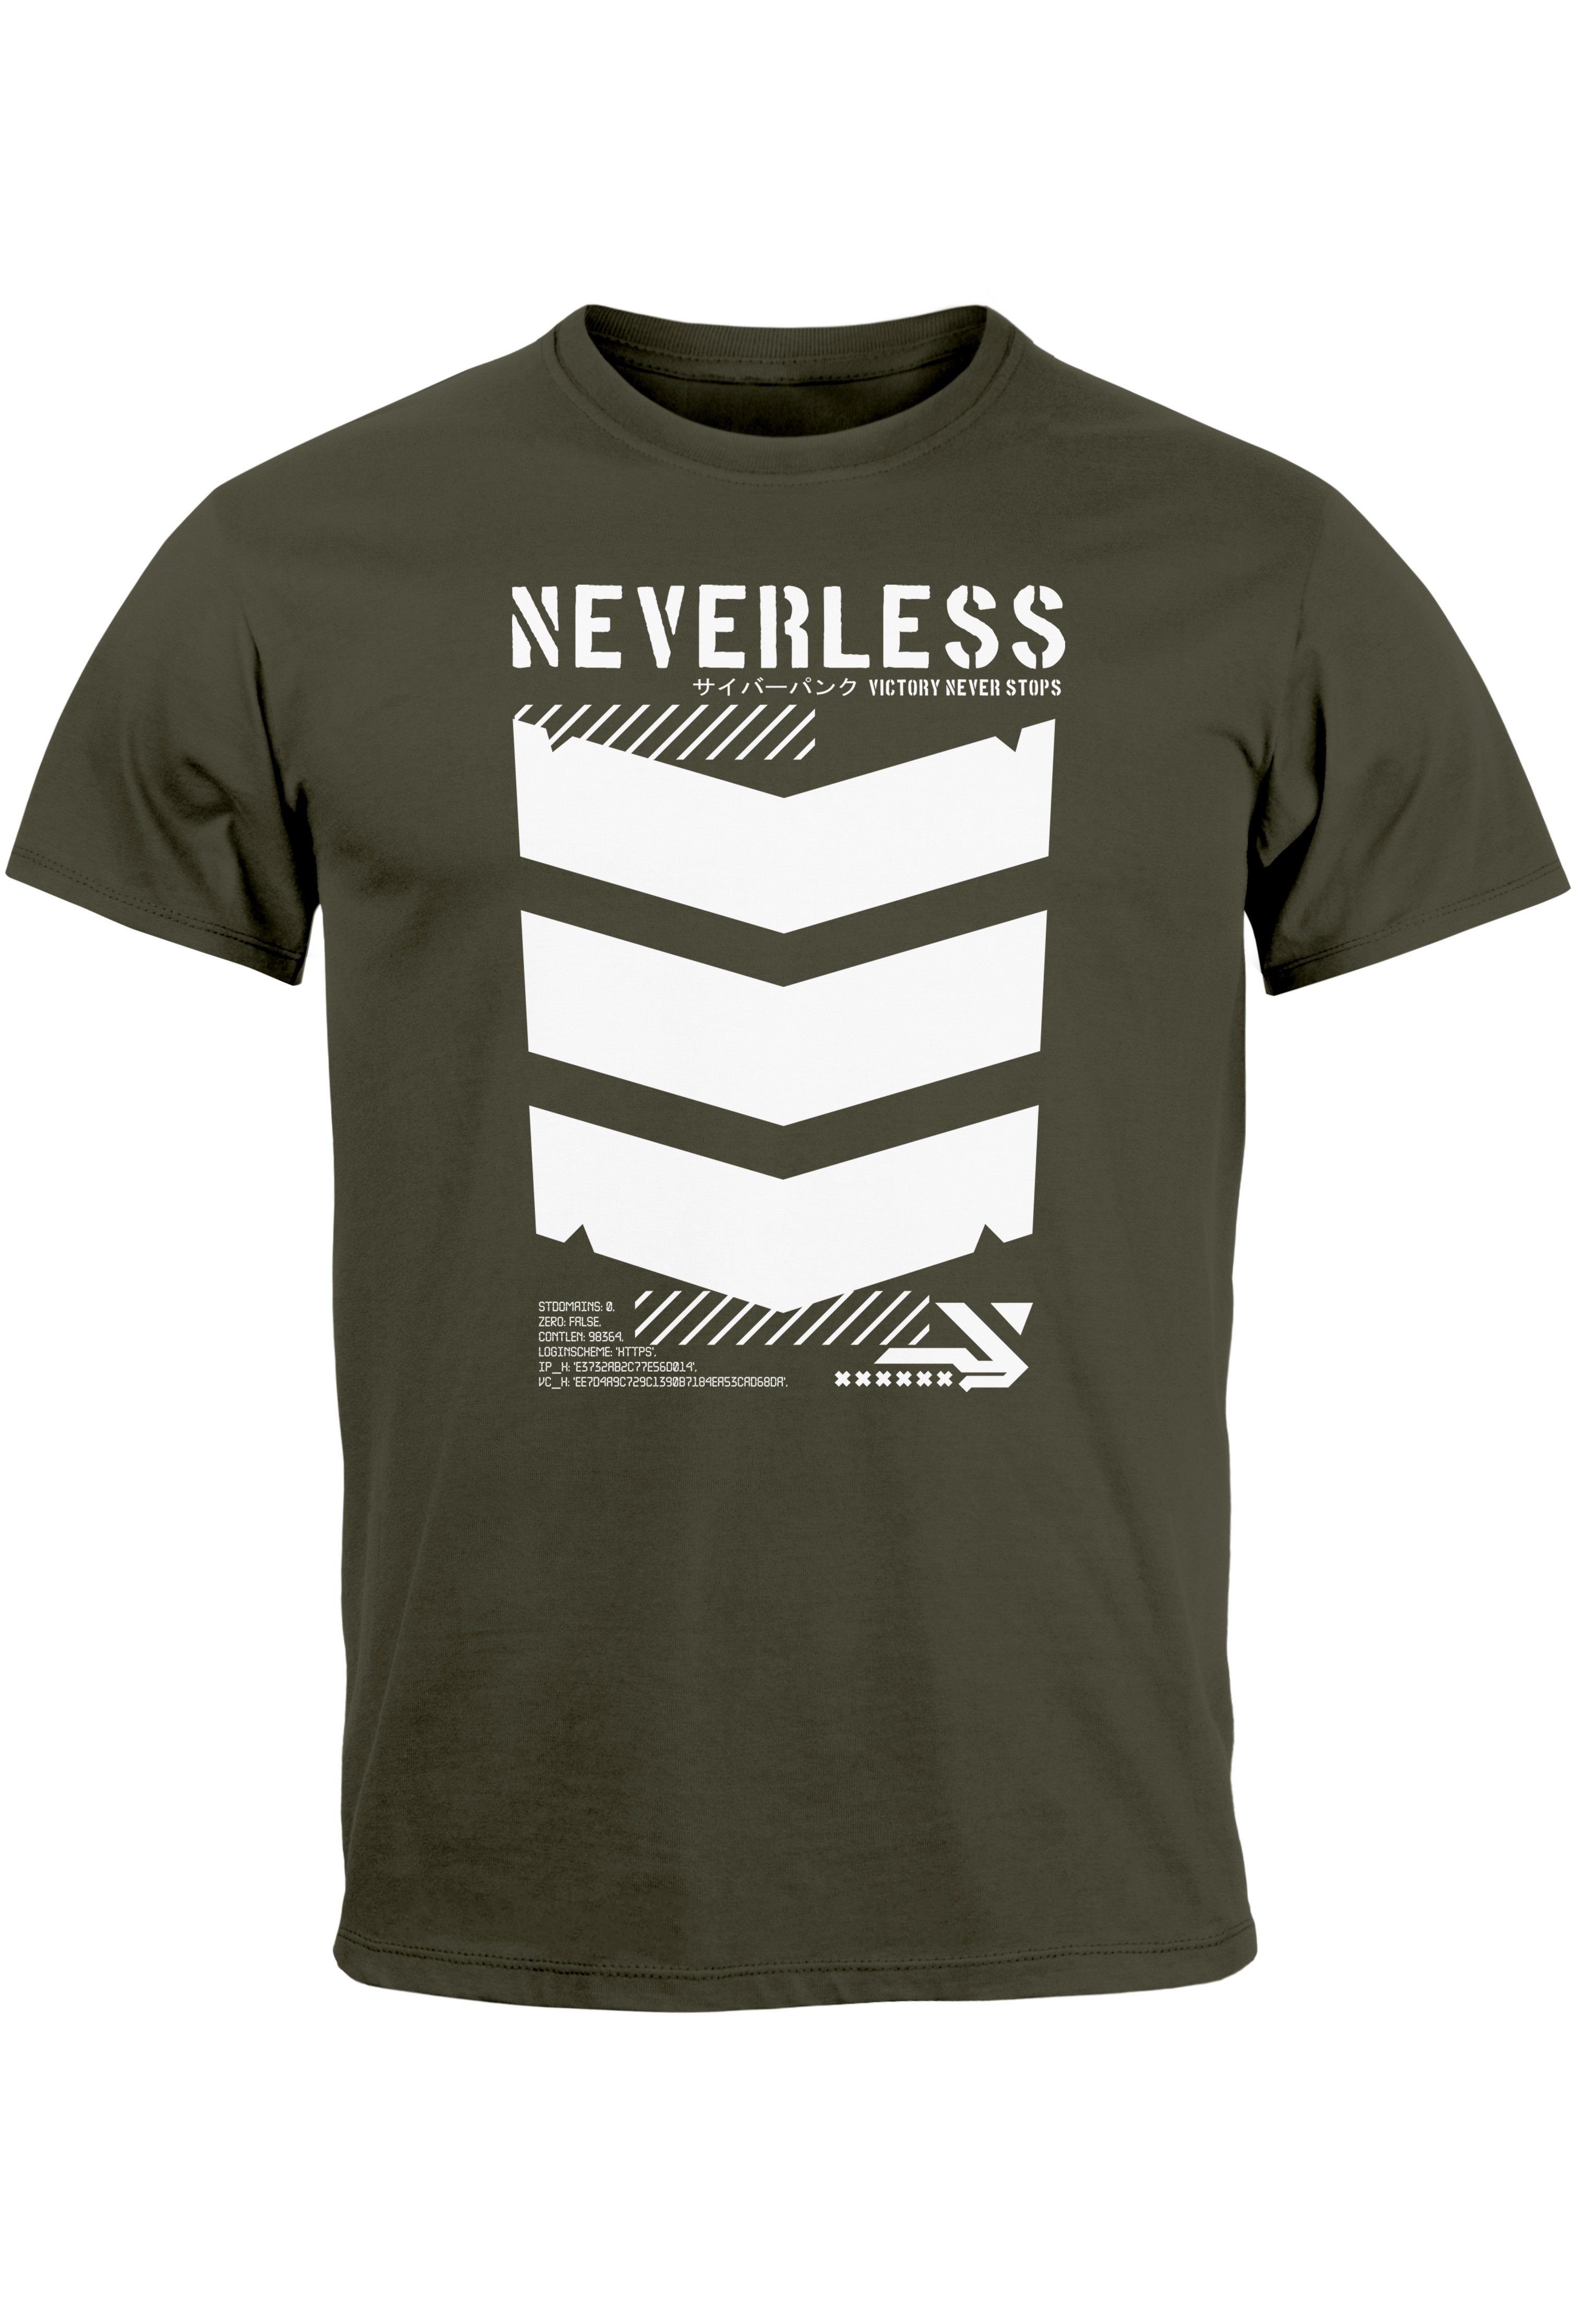 Trend Japanese T-Shirt Fas Military Techwear Motive army Streetstyle Herren Print Print-Shirt mit Neverless